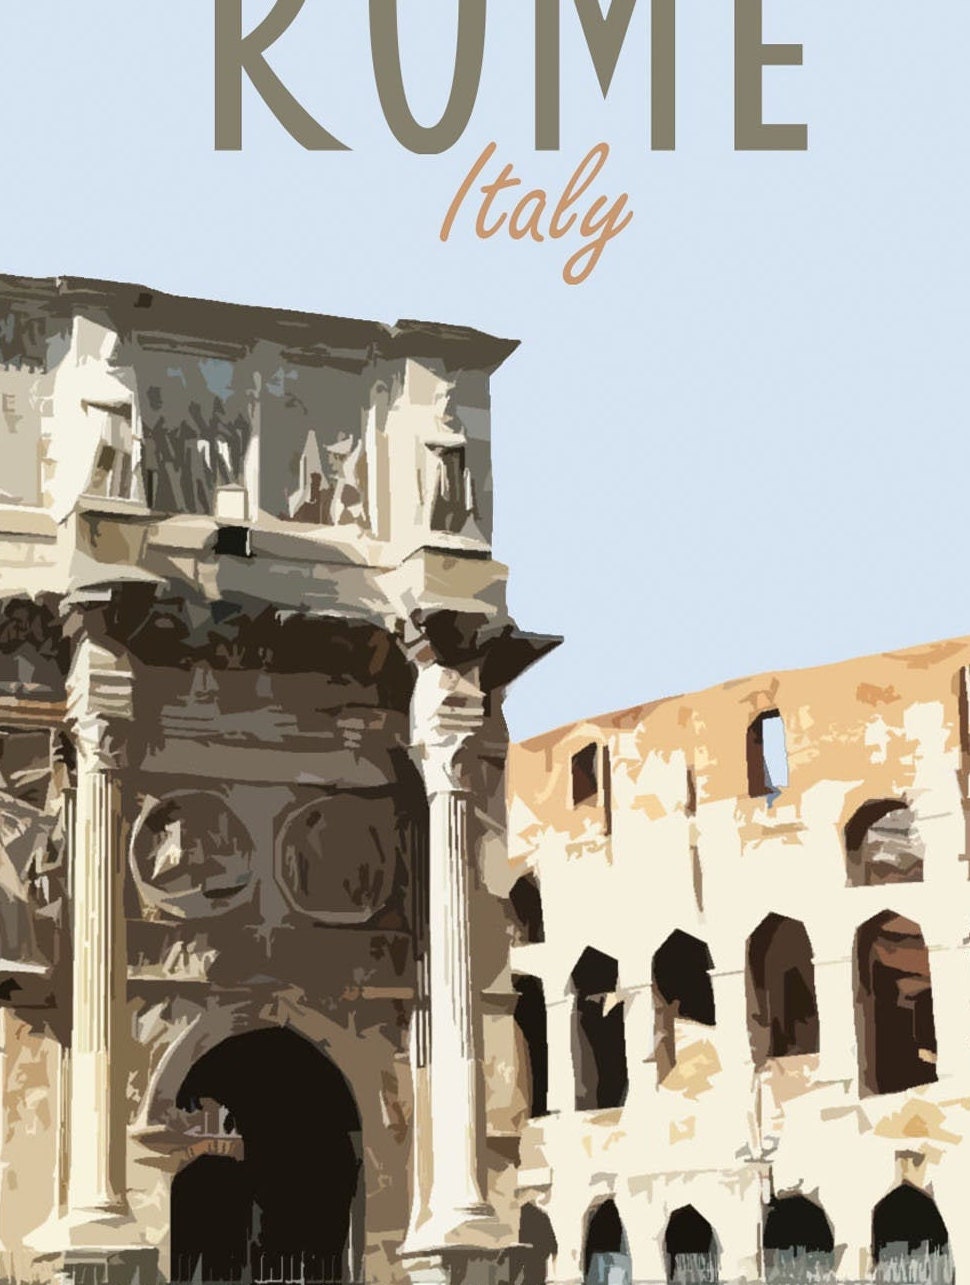 Rome Travel Poster